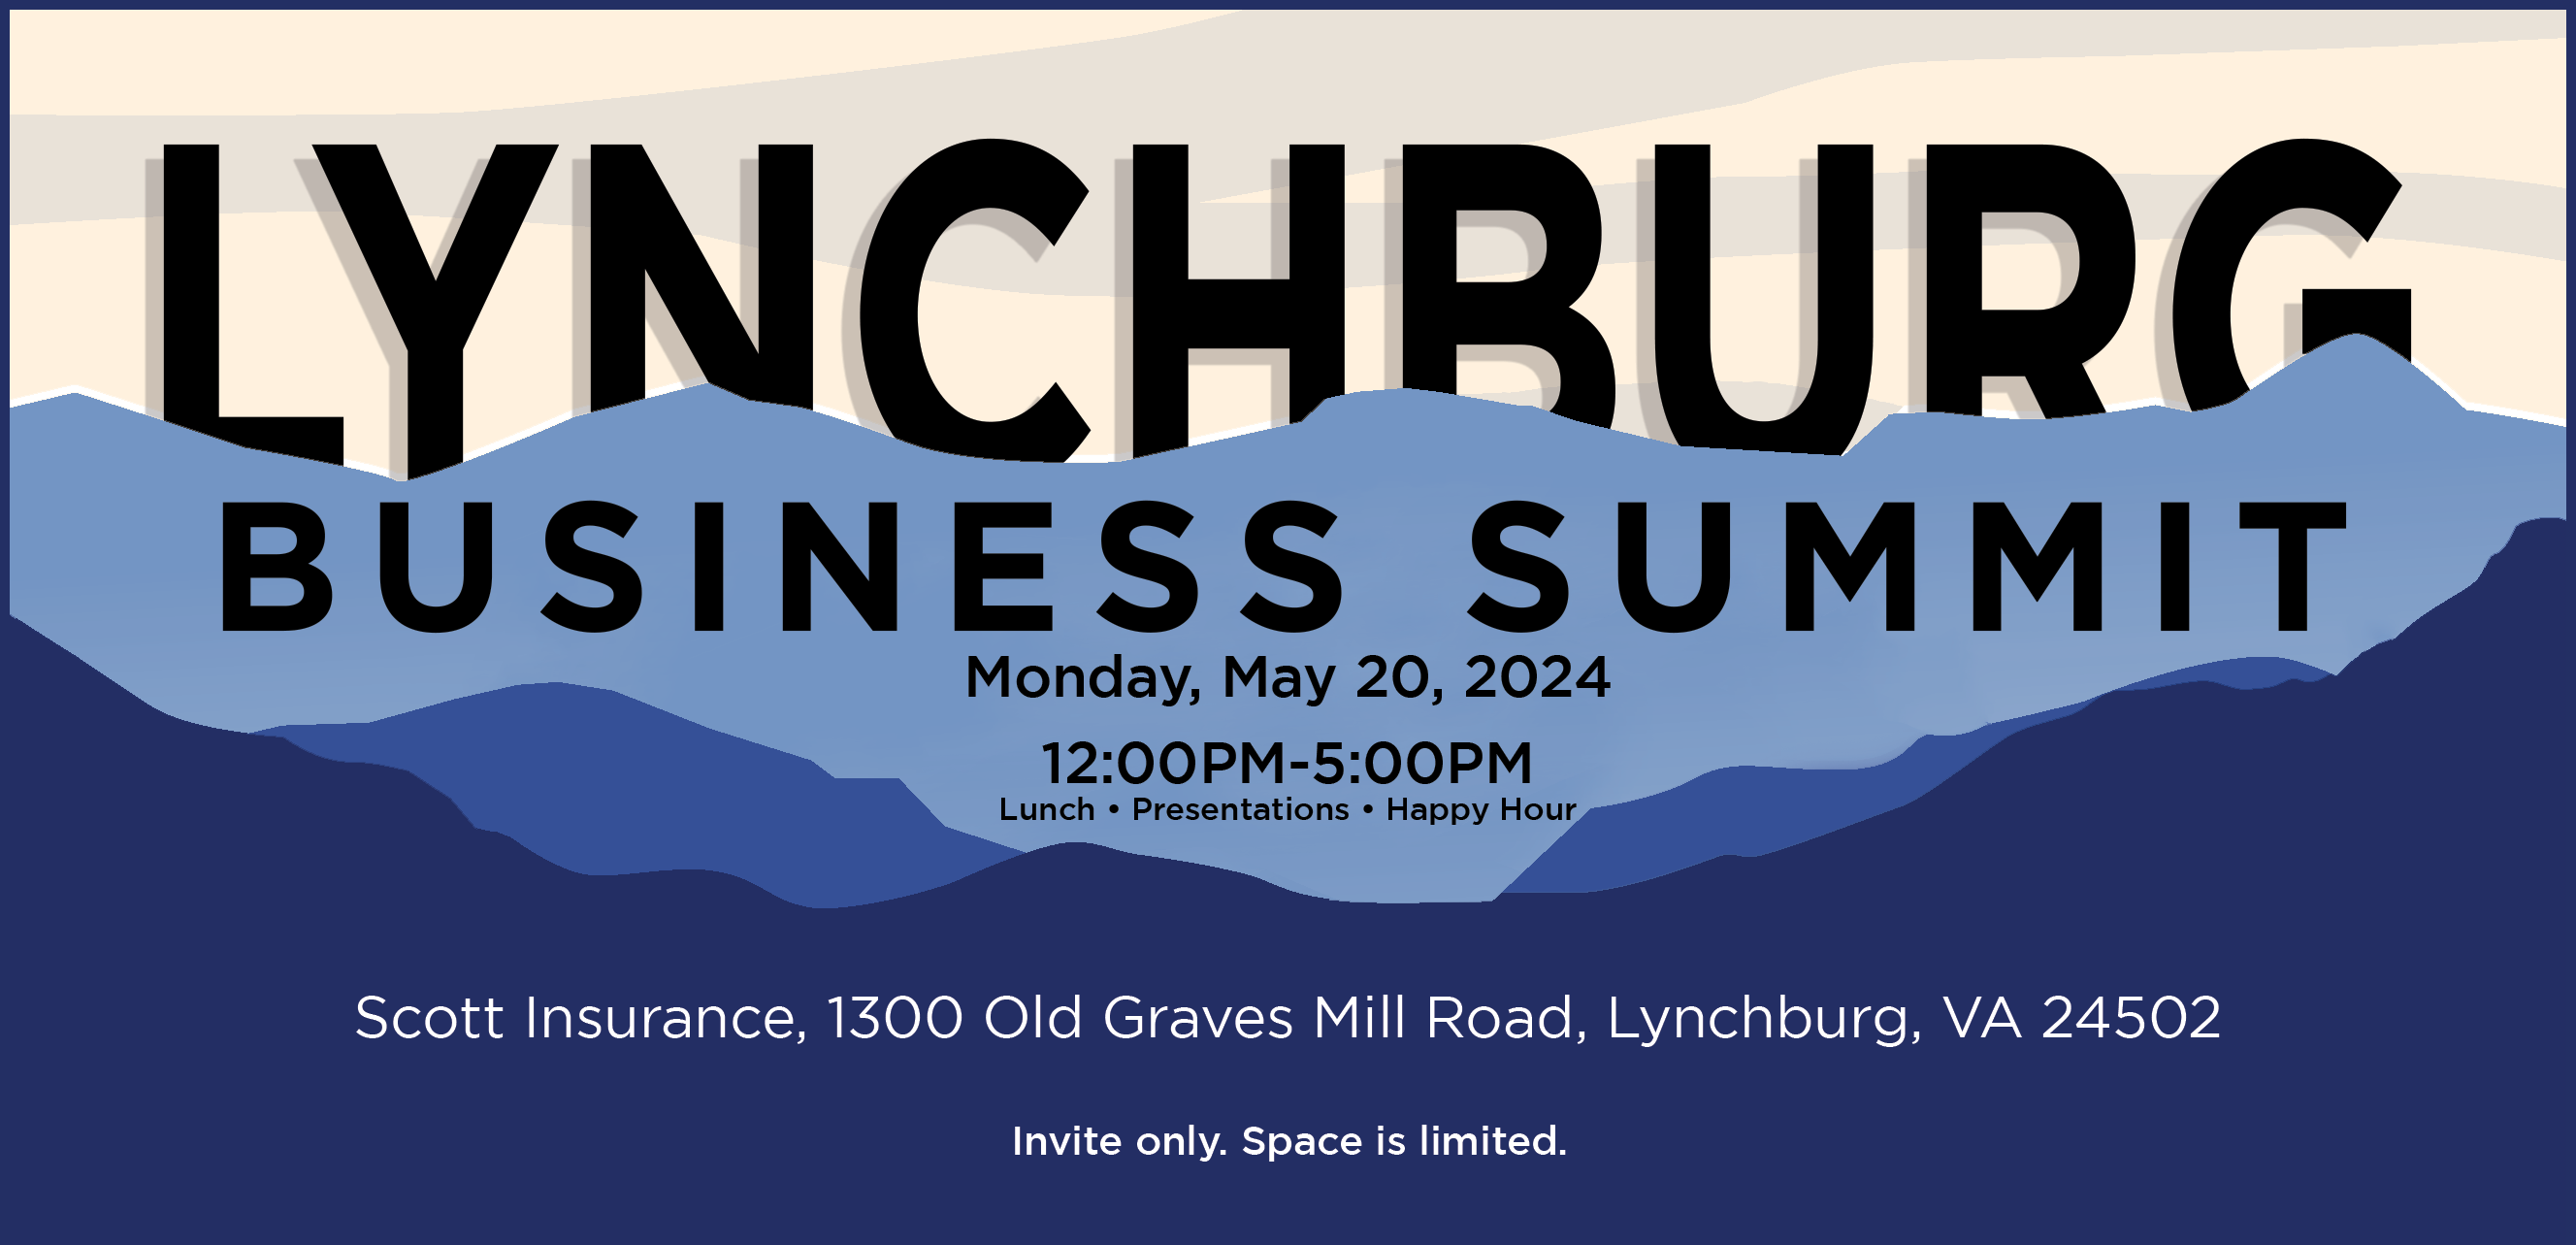 Lynchburg Business Summit Graphic